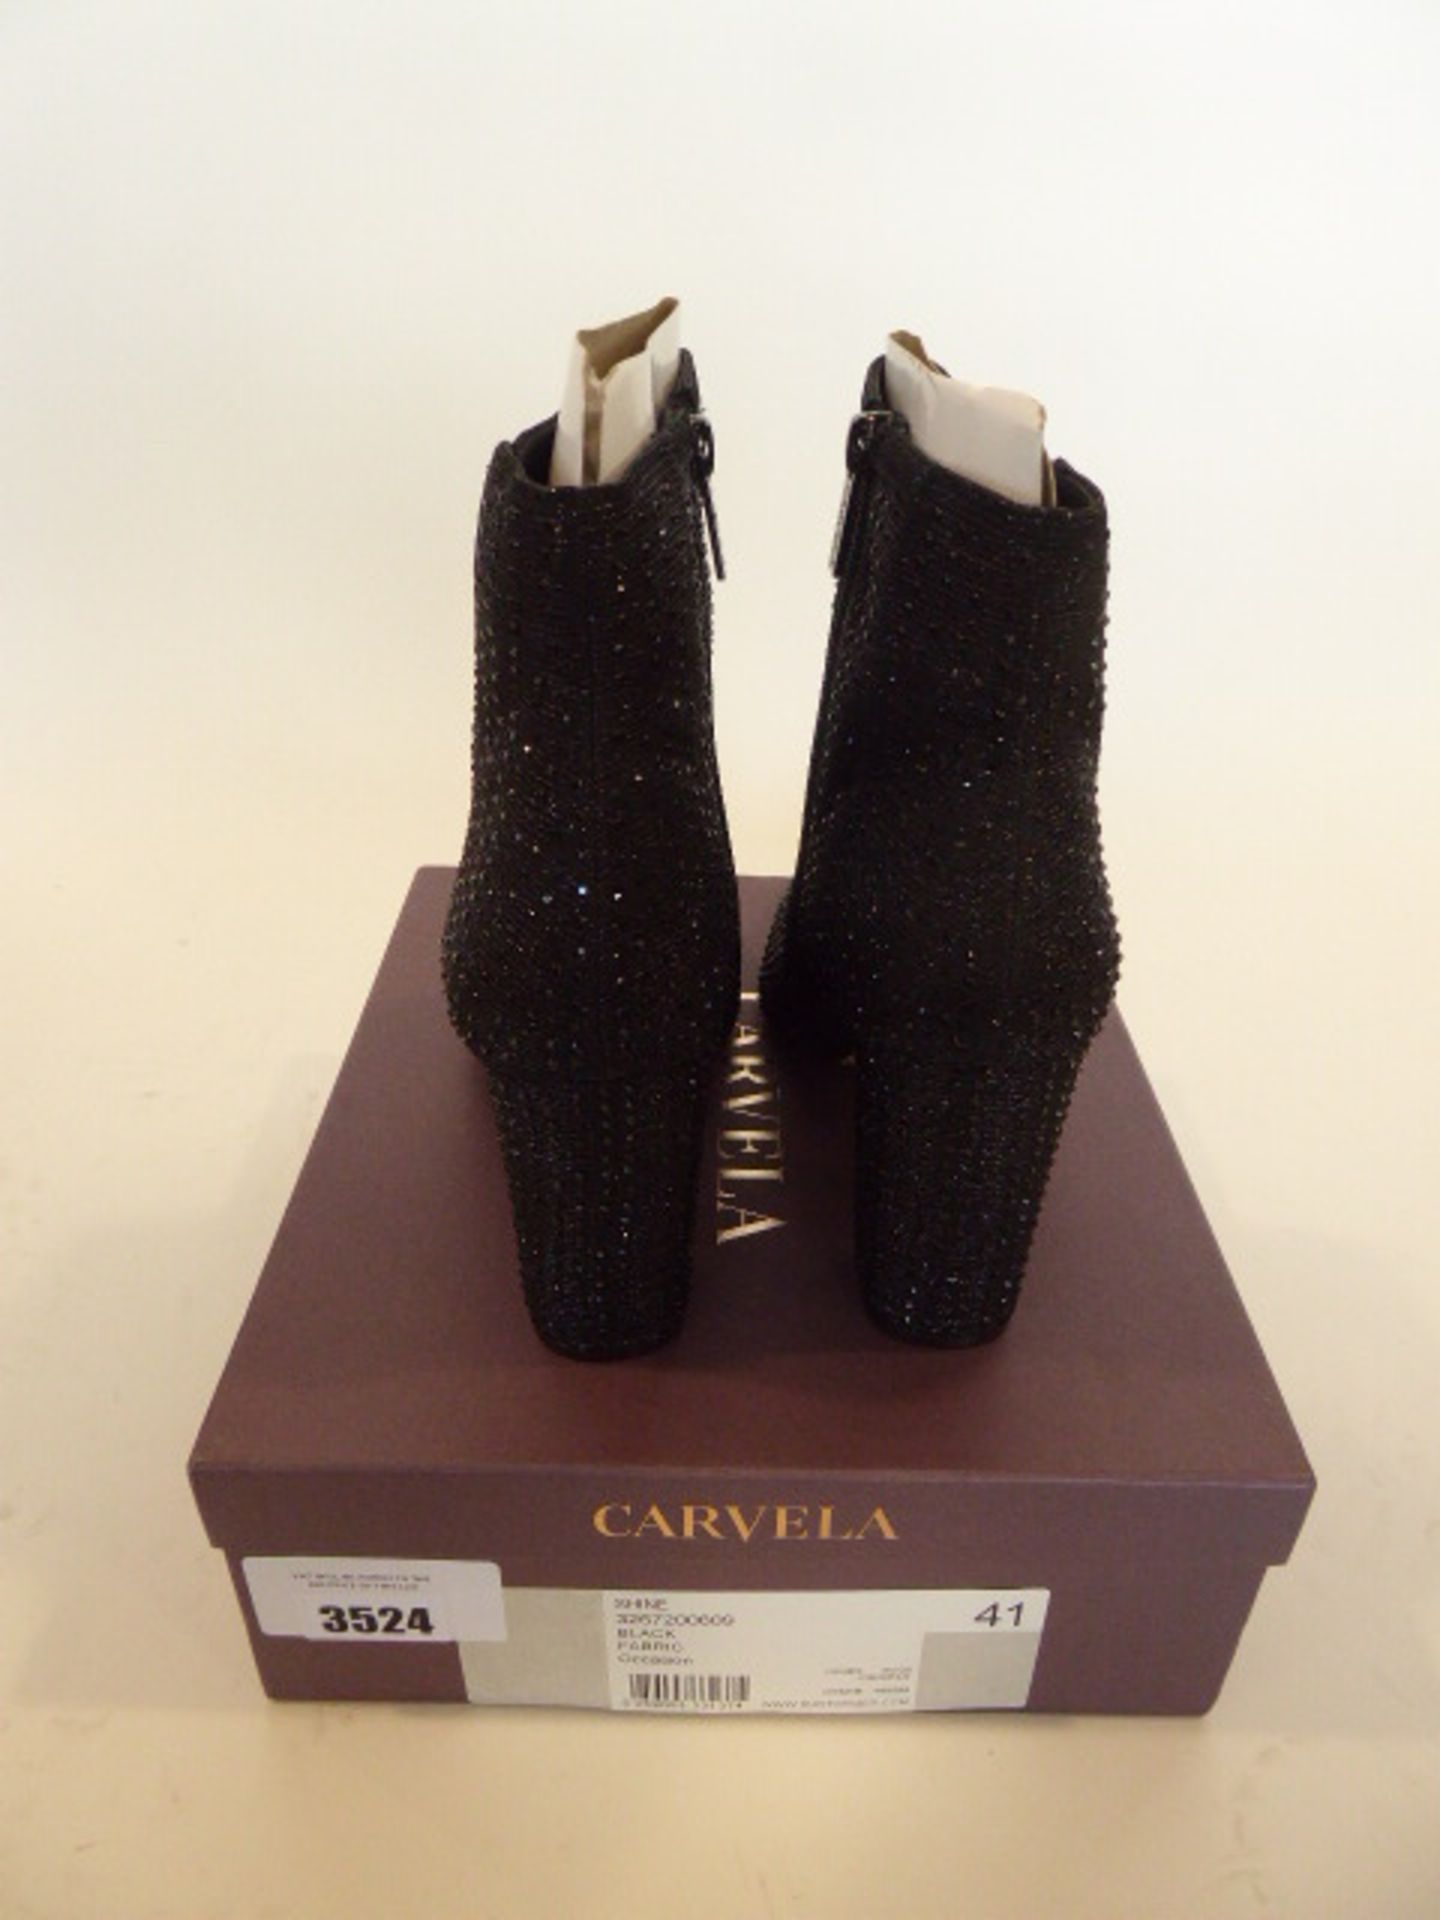 Carvela Shine boots size EU 41 - Image 3 of 3